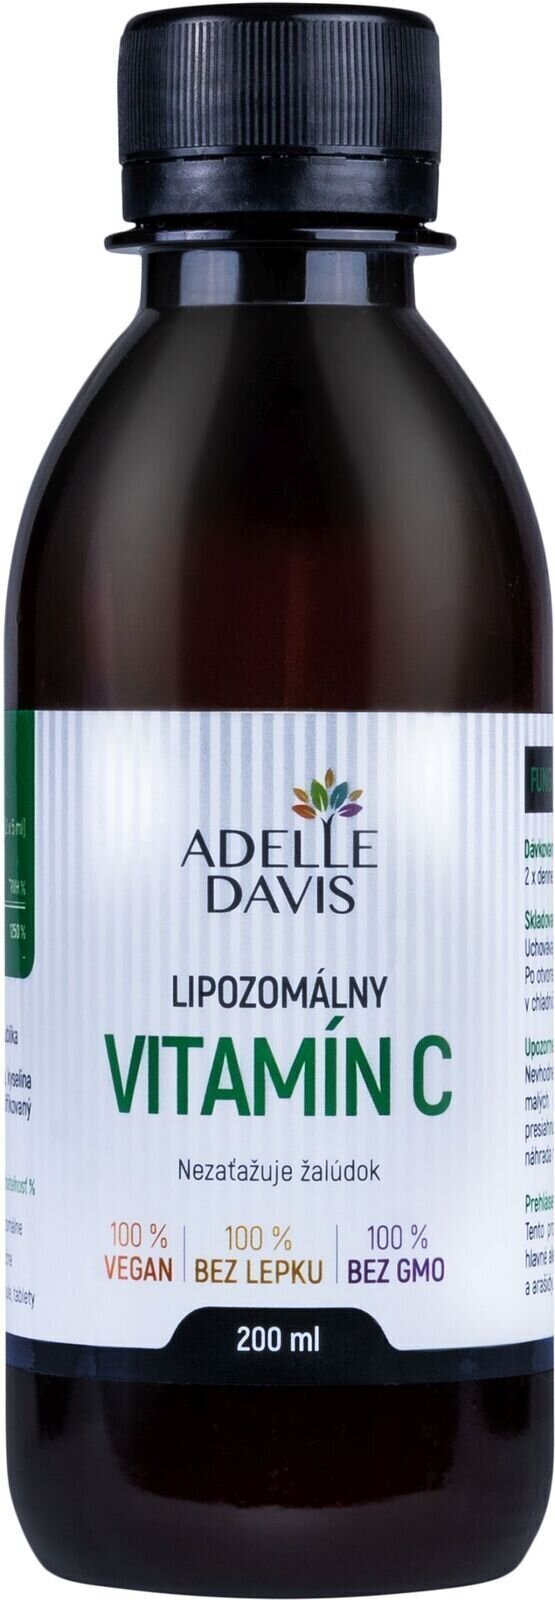 Vitamin C Adelle Davis Liposomal Vitamin C 200 ml Vitamin C